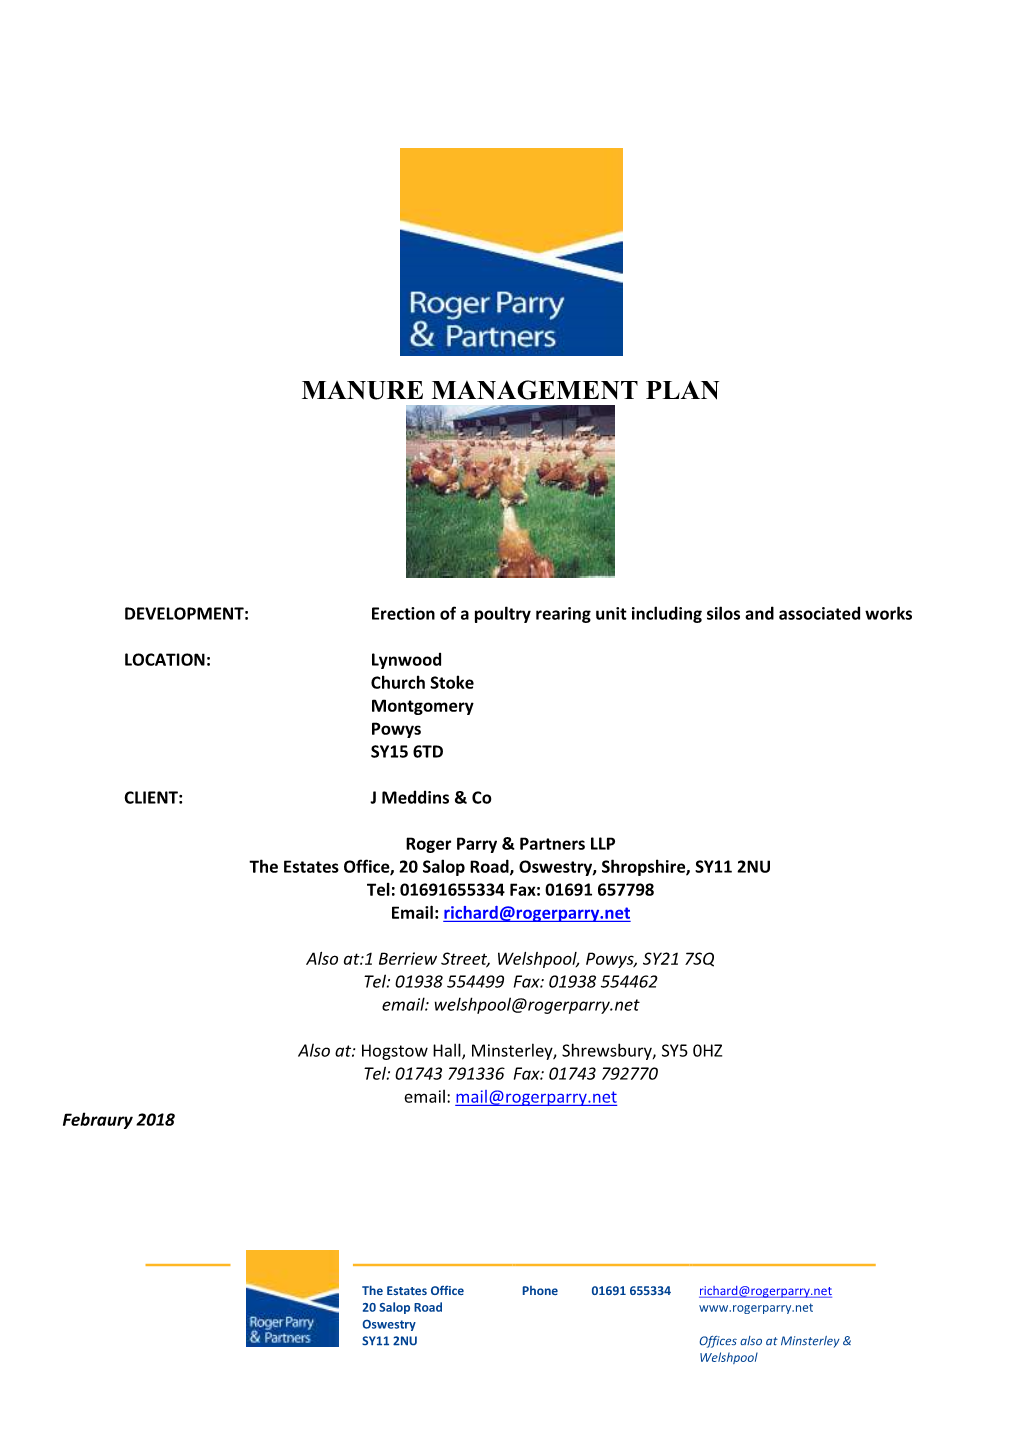 Manure Management Plan